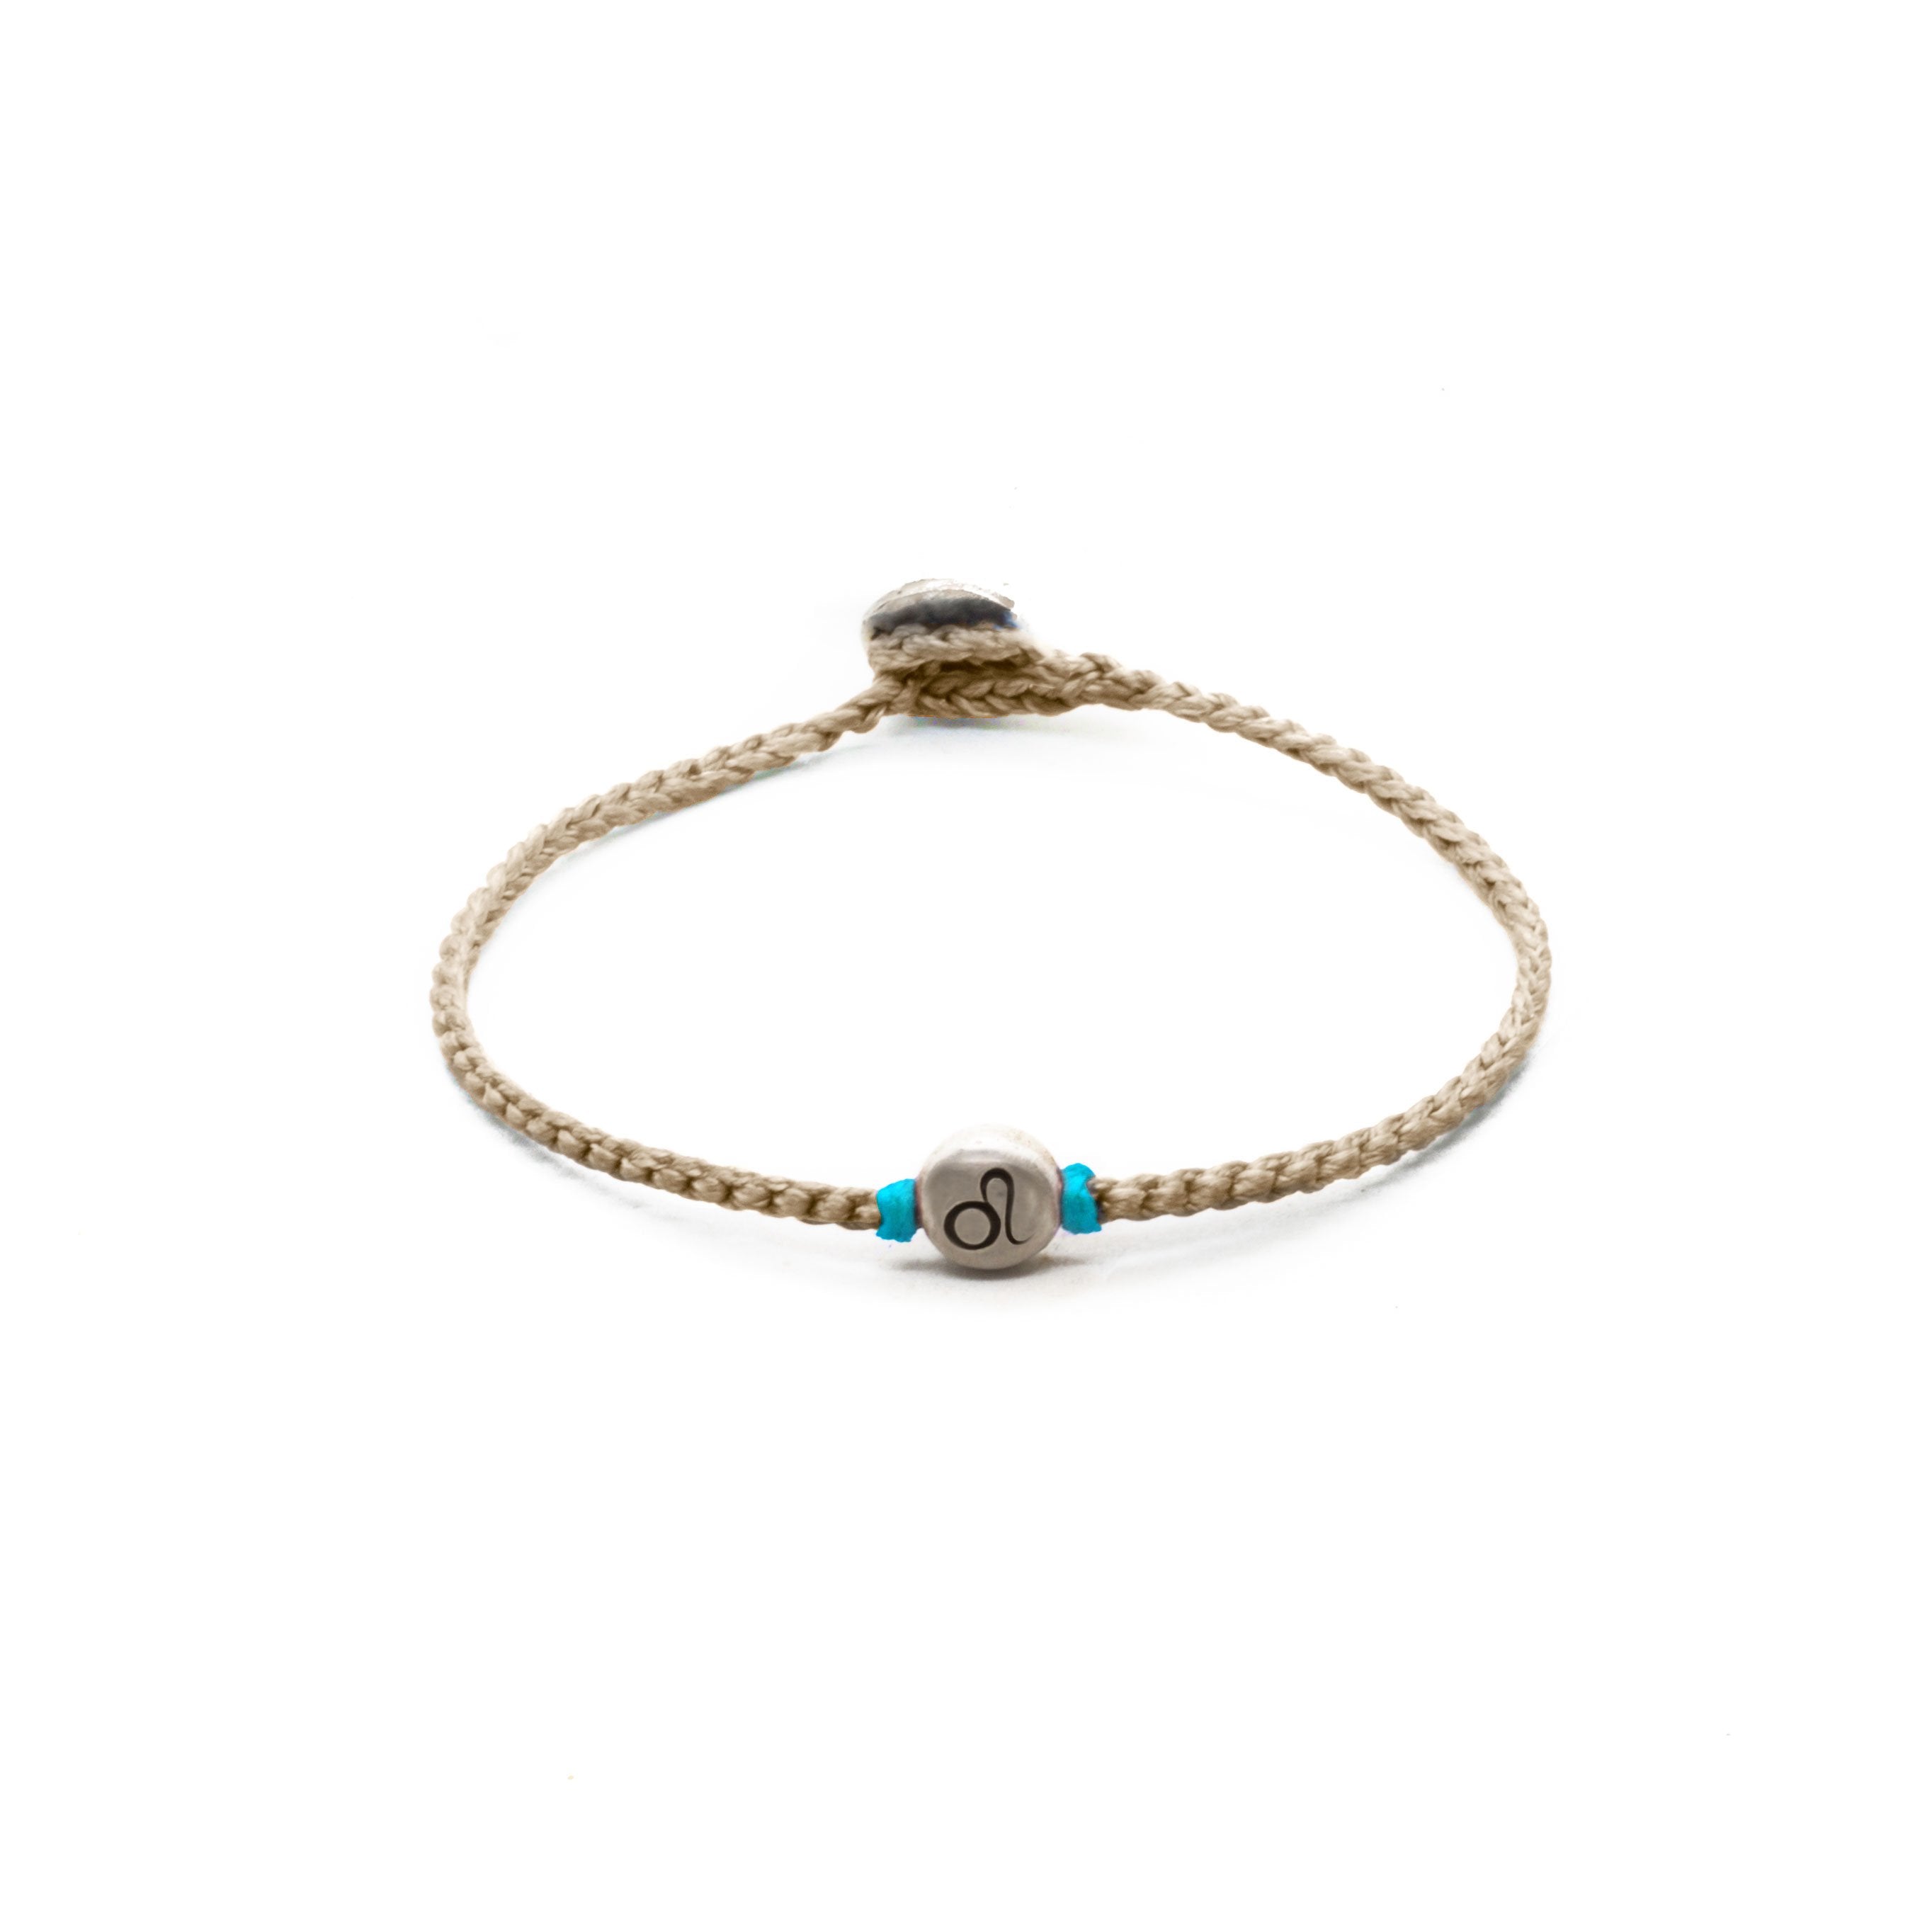 Silver Leo zodiac sign bracelet with beige hand braided chain.